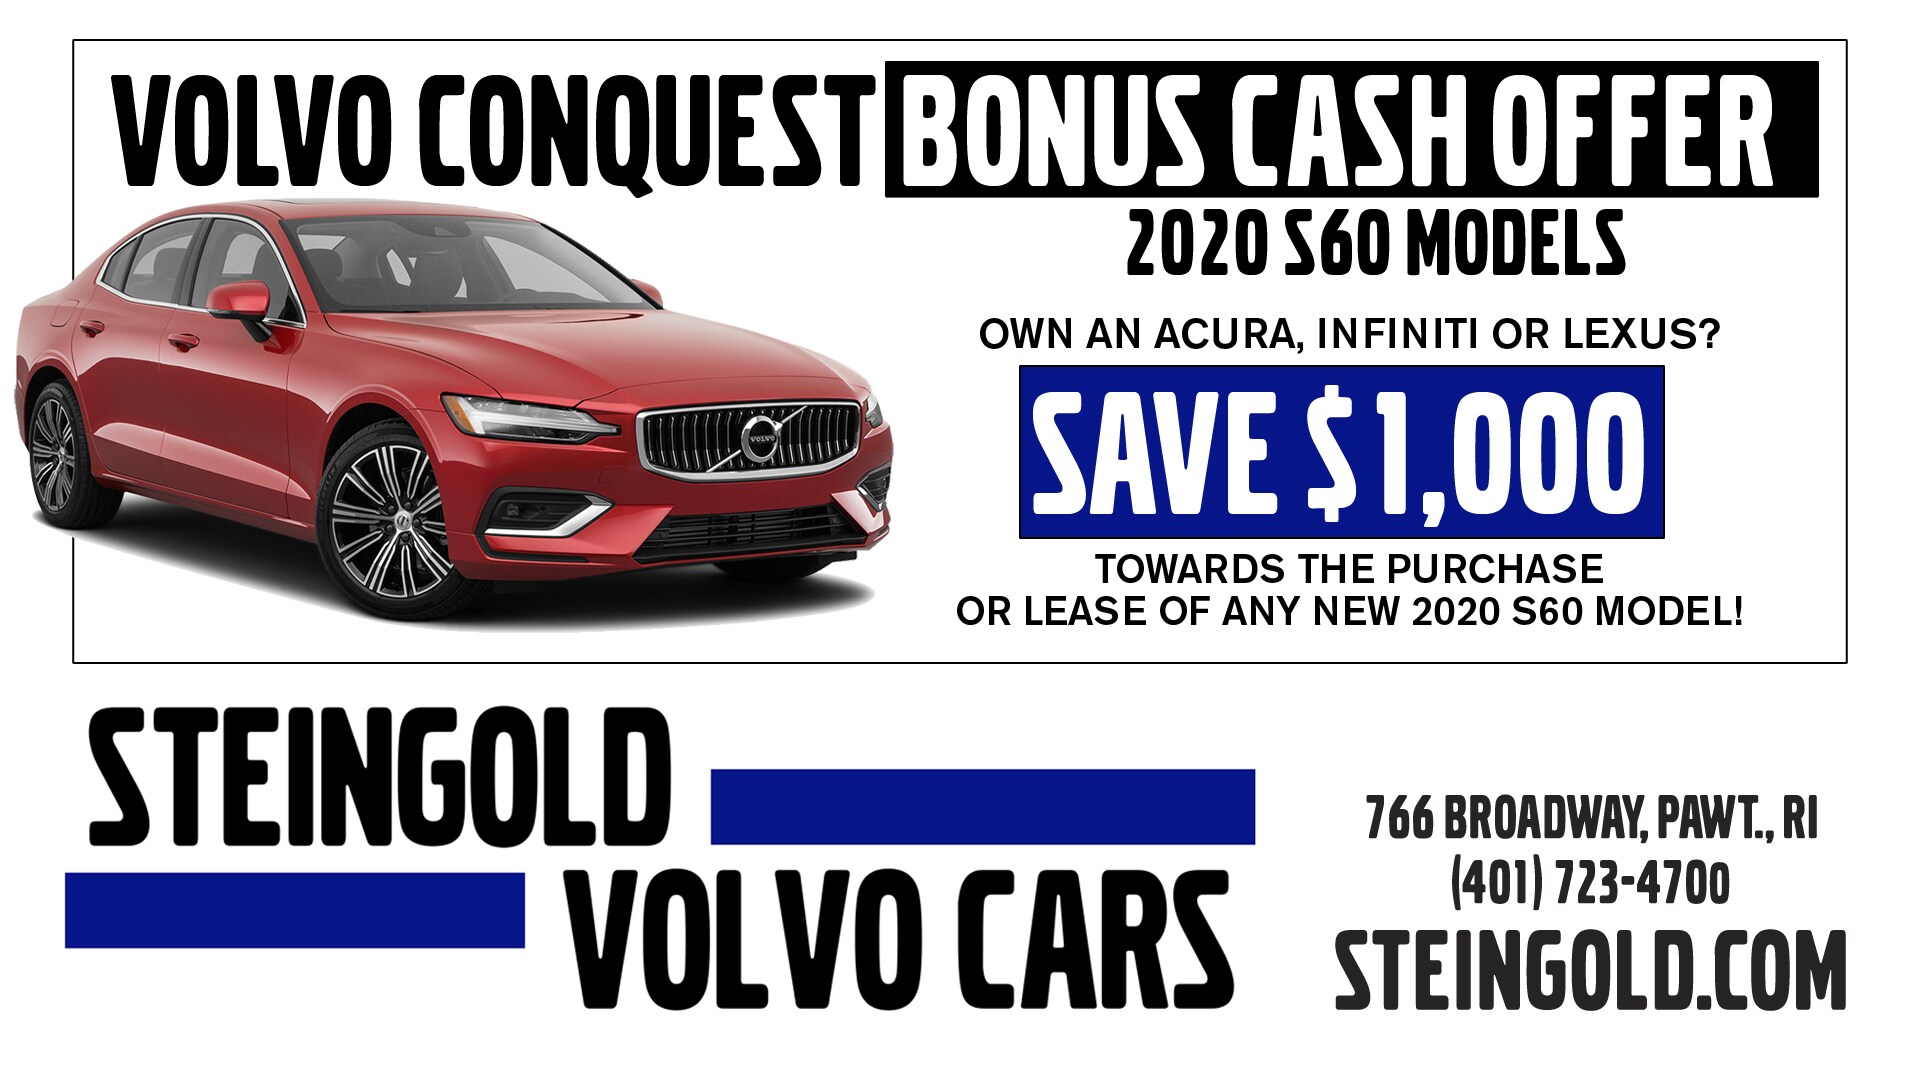 New Volvo Specials in Rhode Island | Steingold Volvo Cars